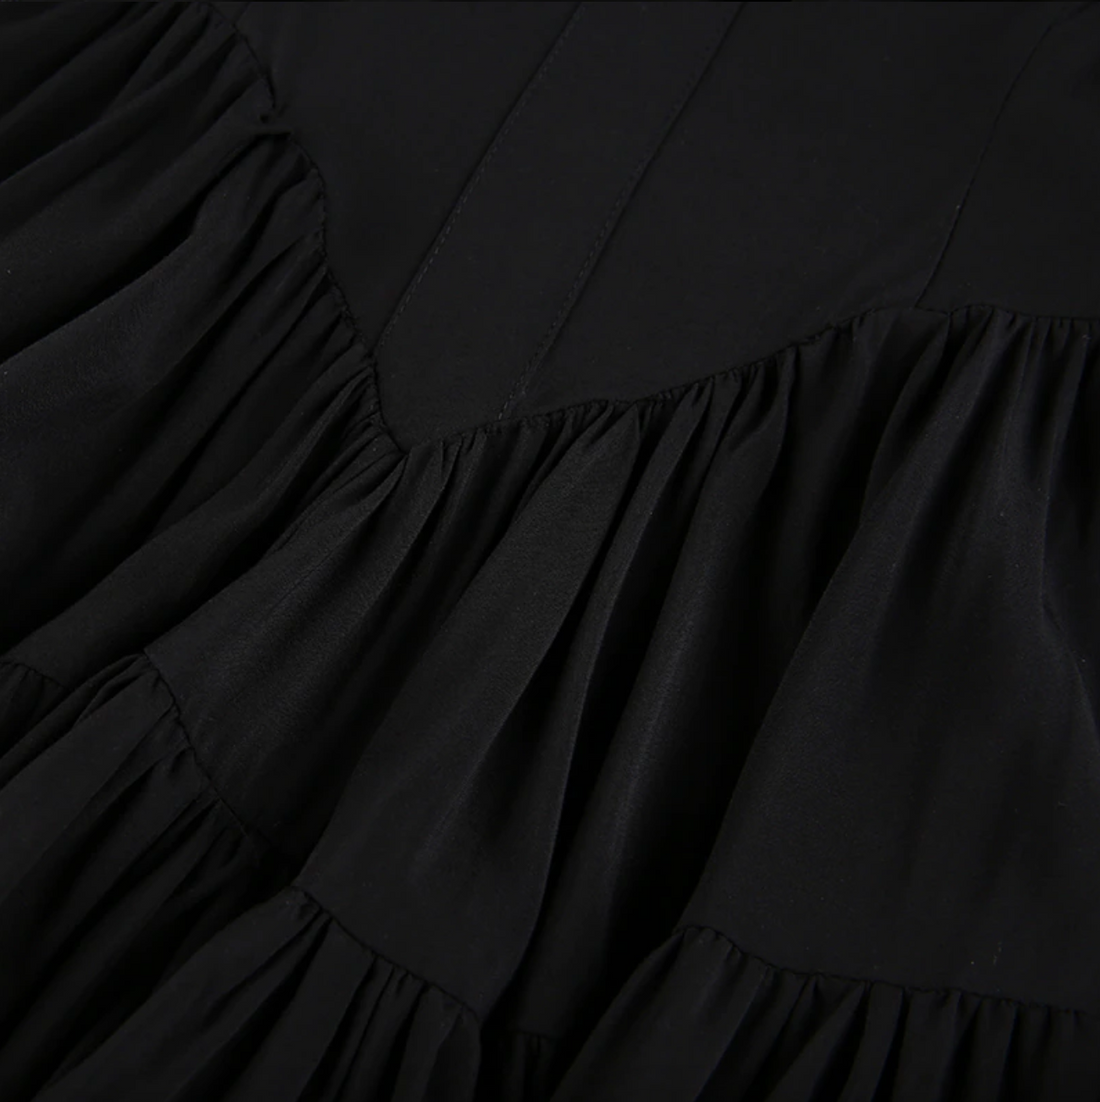 Women's Summer Gothic A-Line Mini Dress with Ruffles